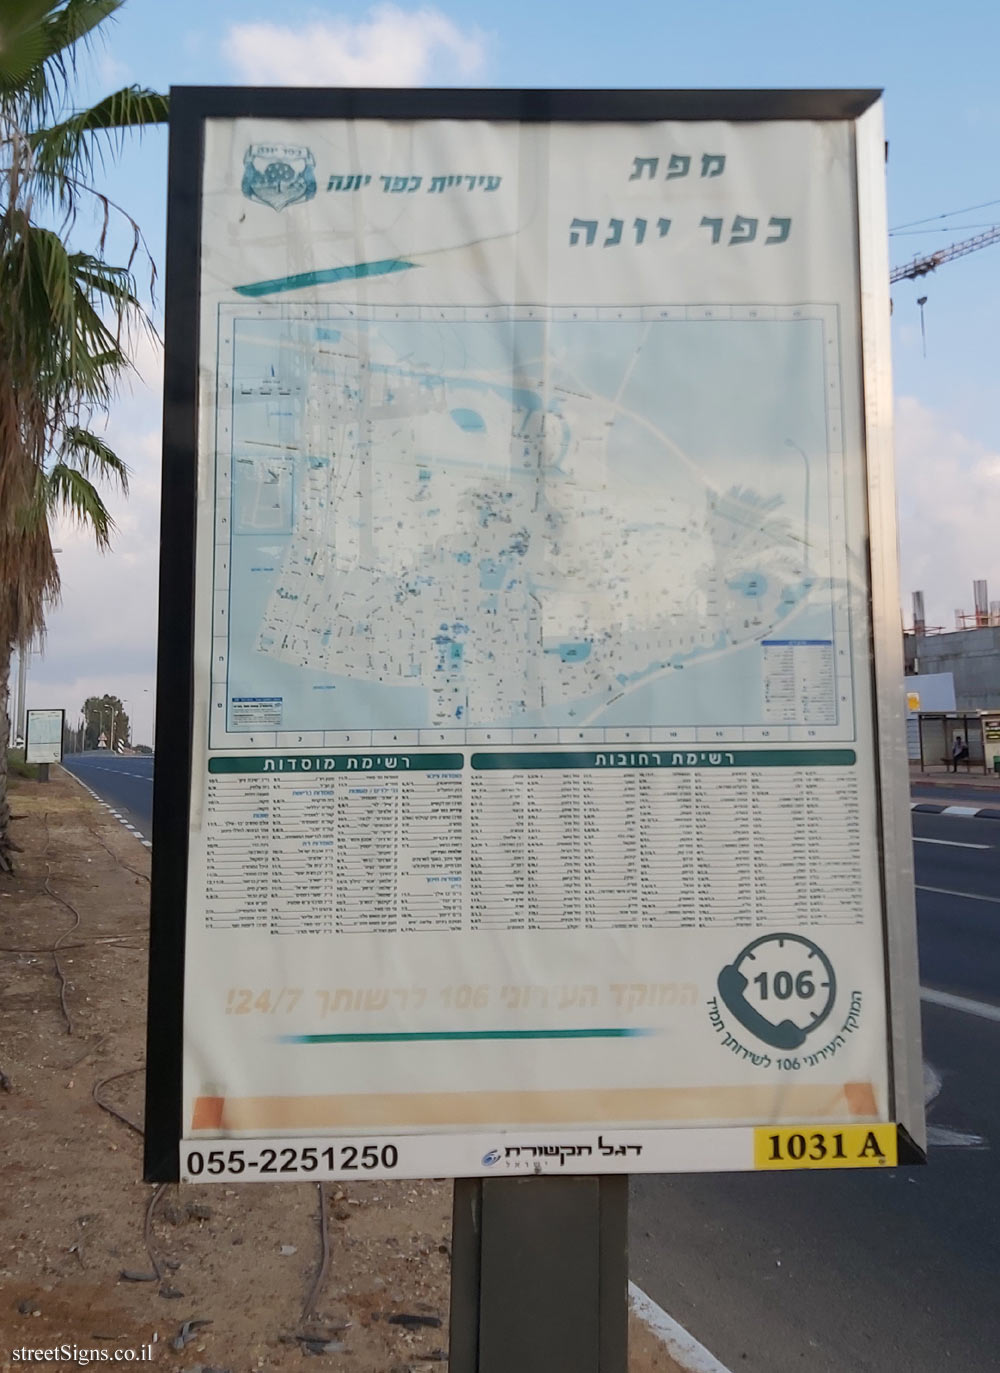 Kfar Yona - Map of the city